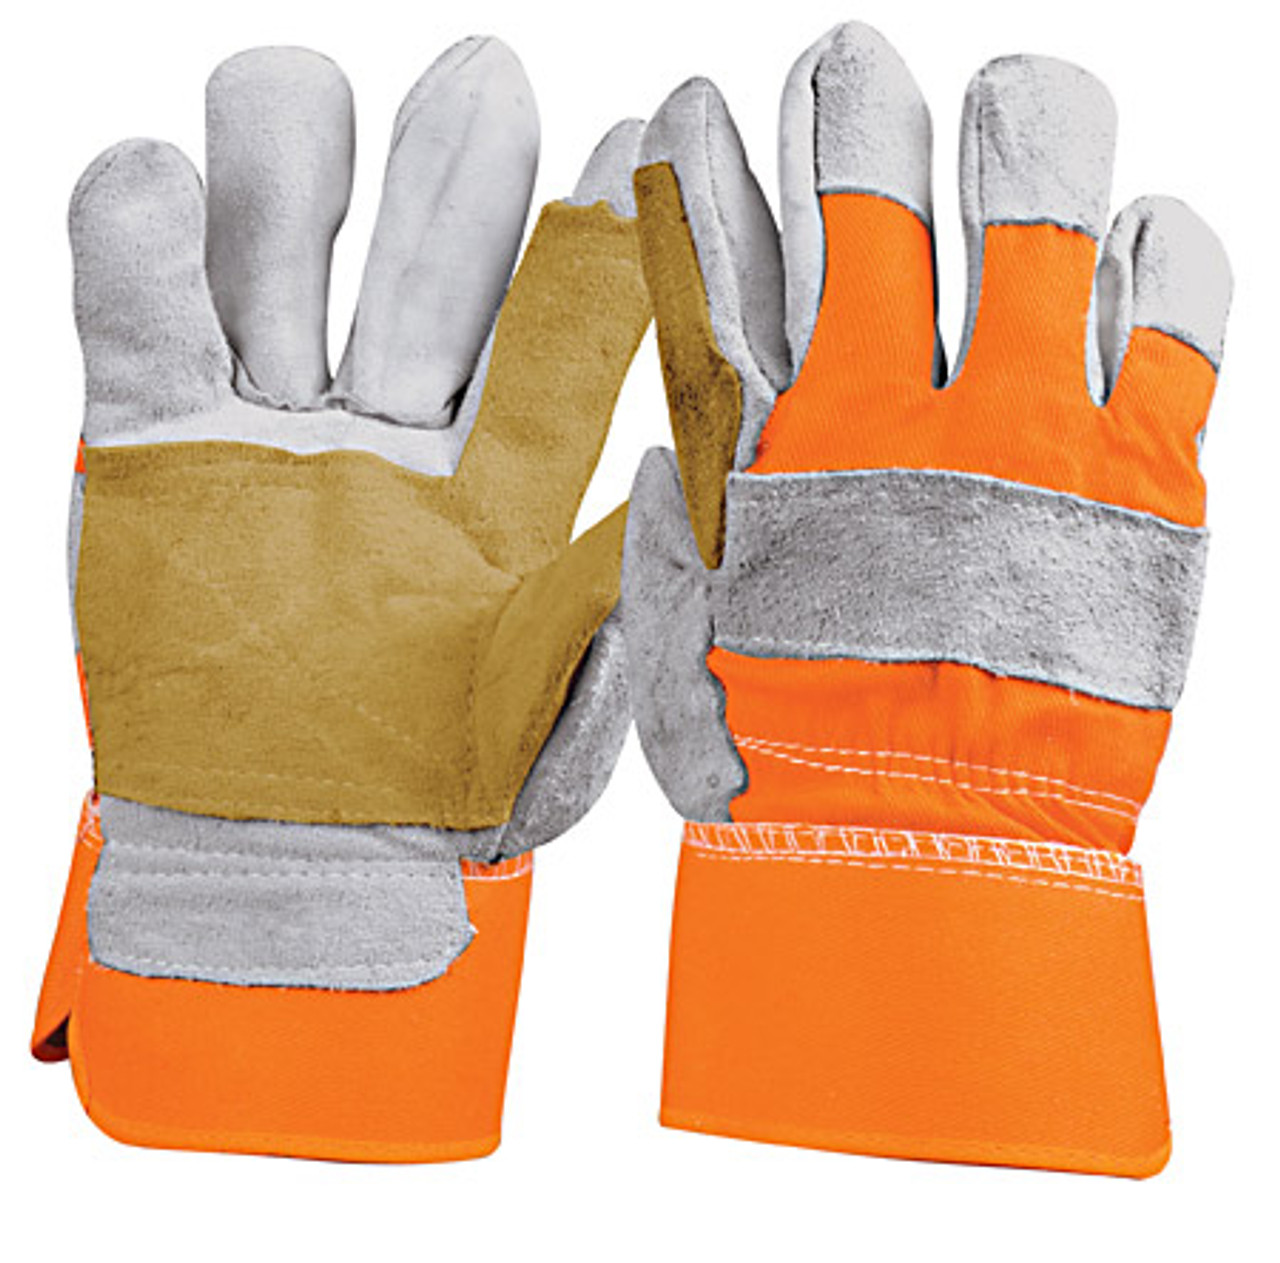 Truper Canvas & Leather Reinforced Gloves Large #14246-2 Pack